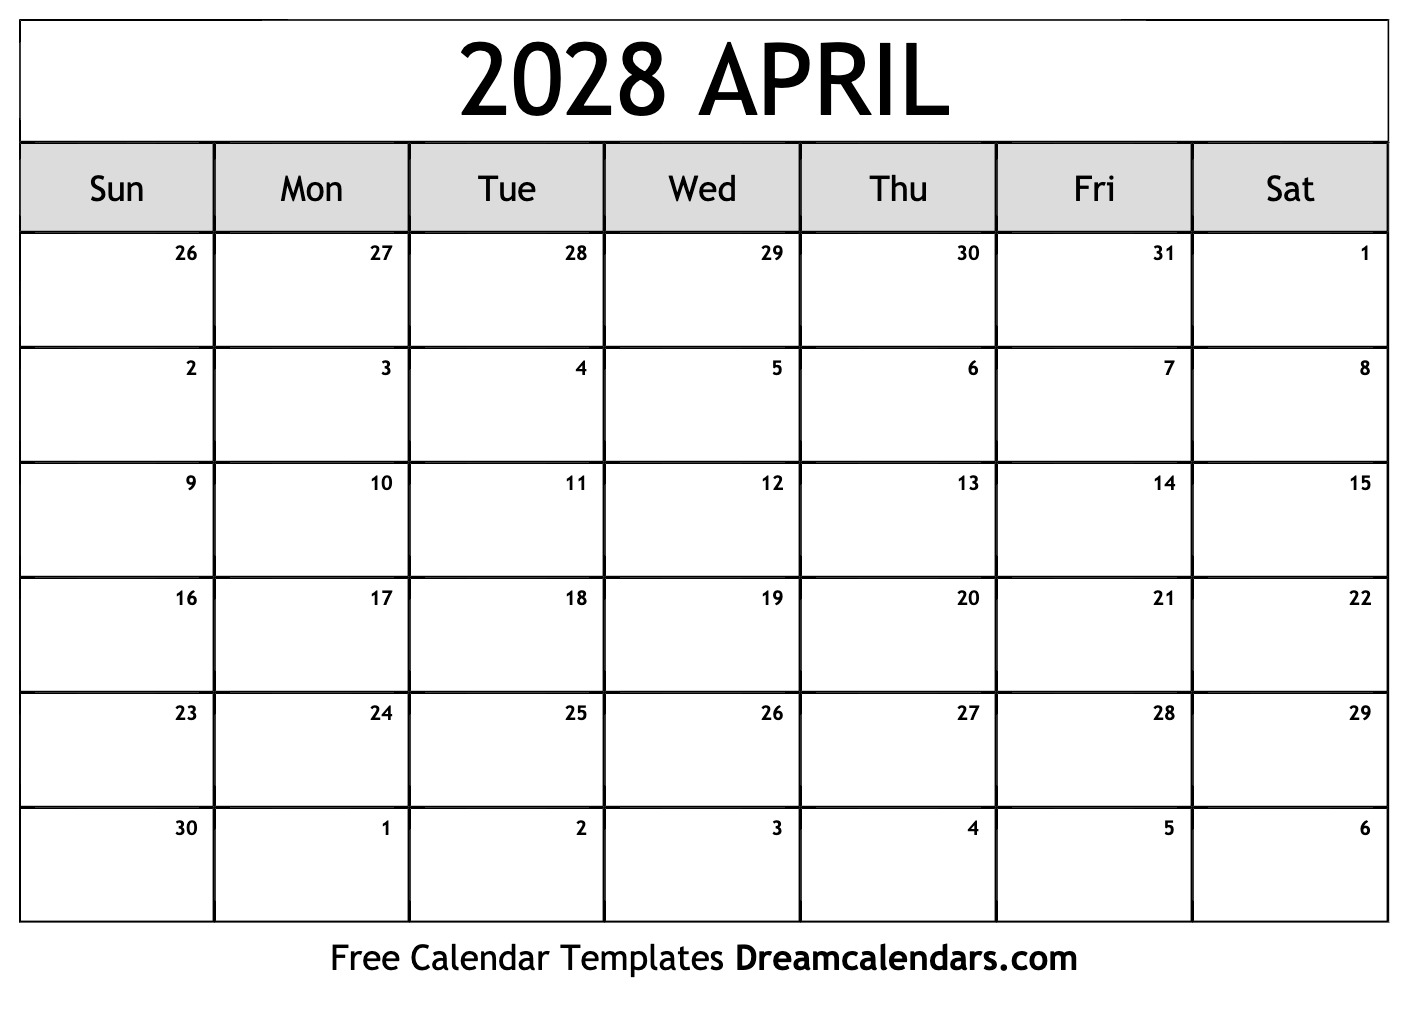 April 2028 Calendar Free Blank Printable With Holidays